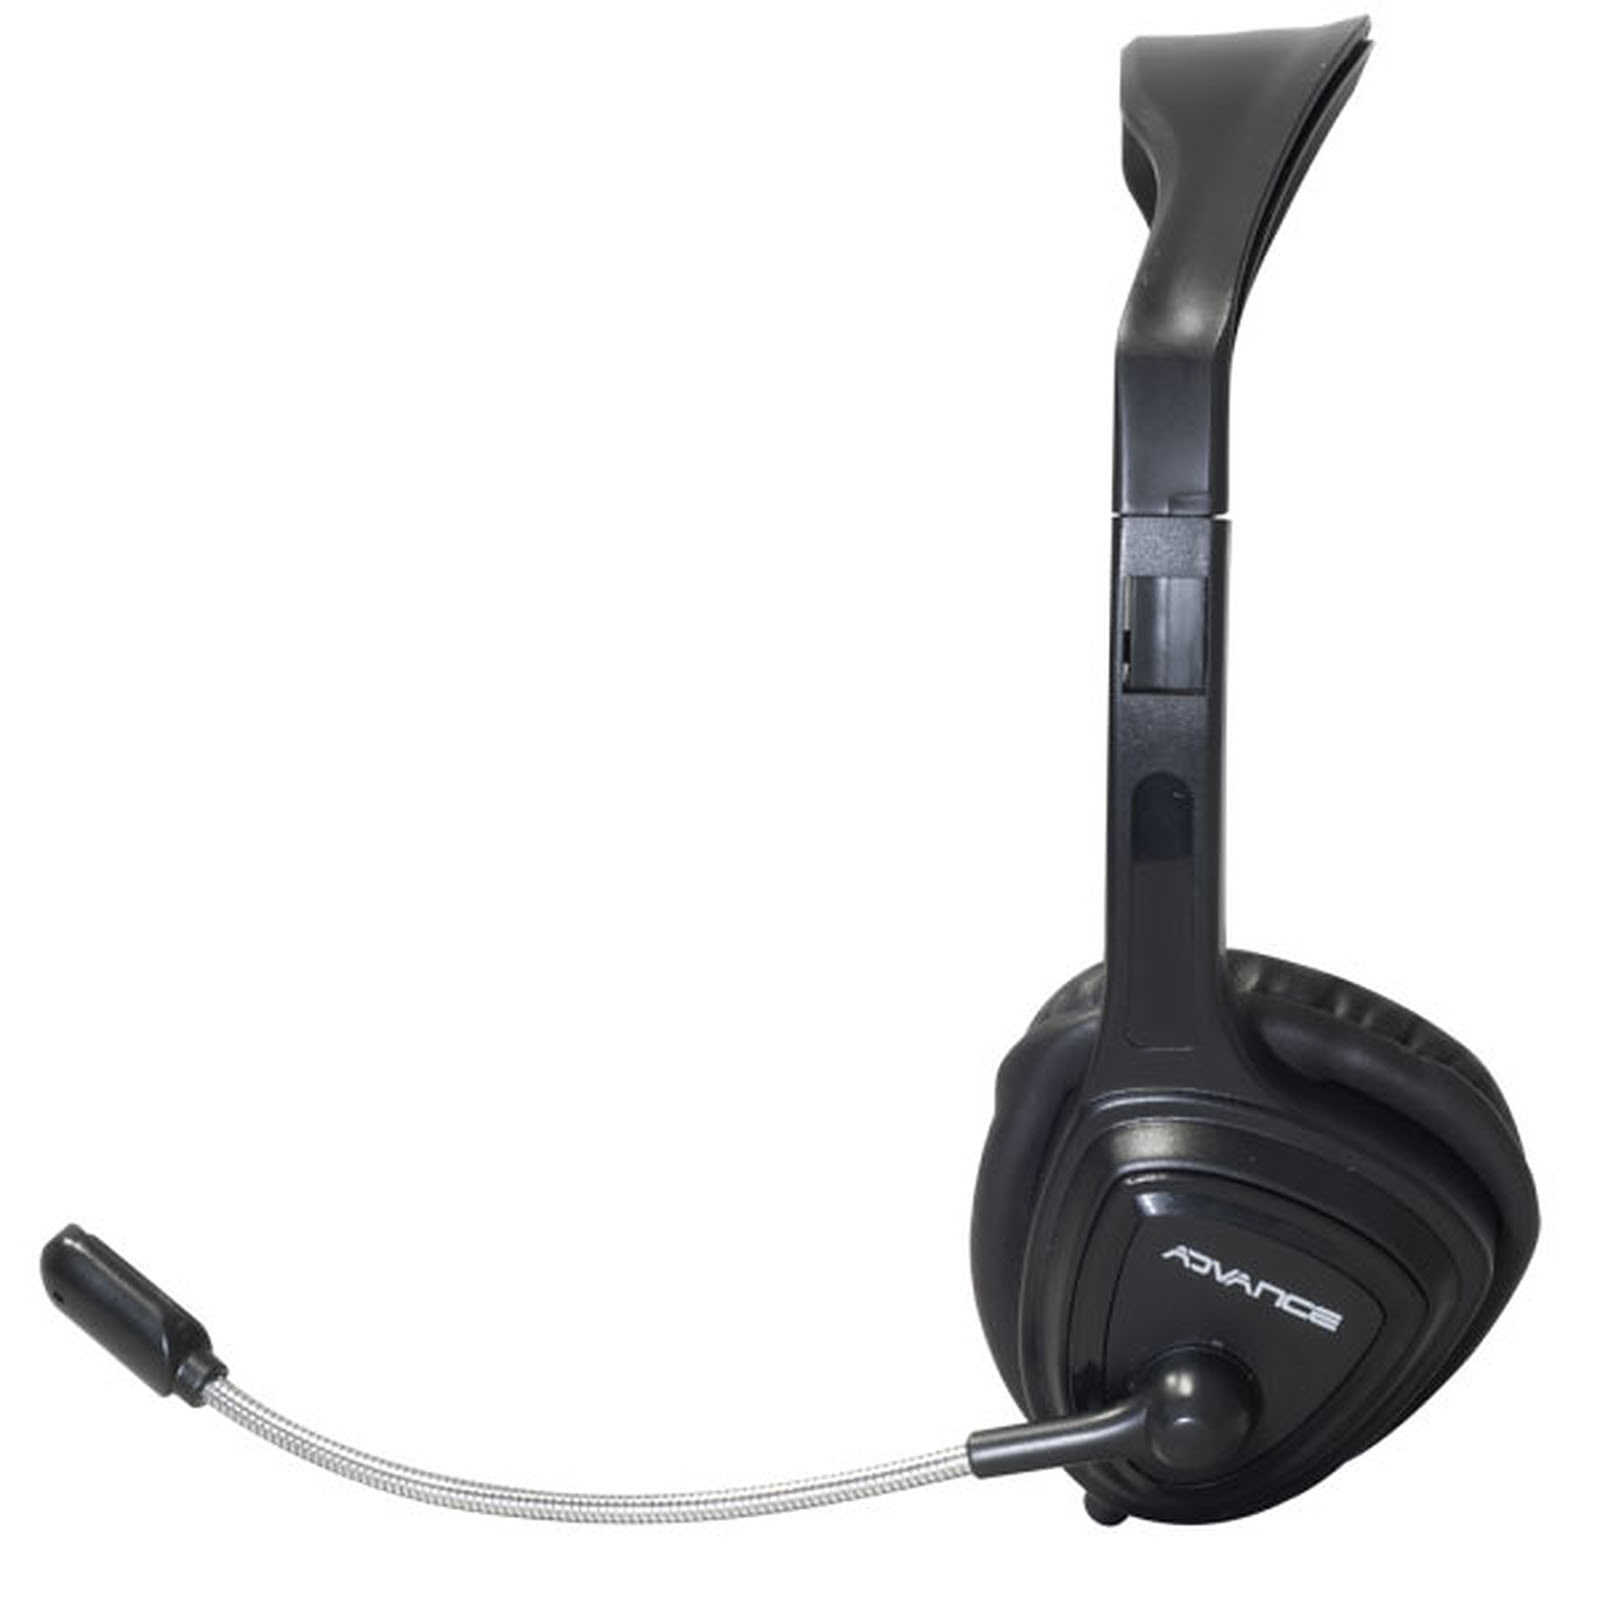 Advance Headphonics Smart Stereo Noir - Micro-casque - grosbill-pro.com - 4